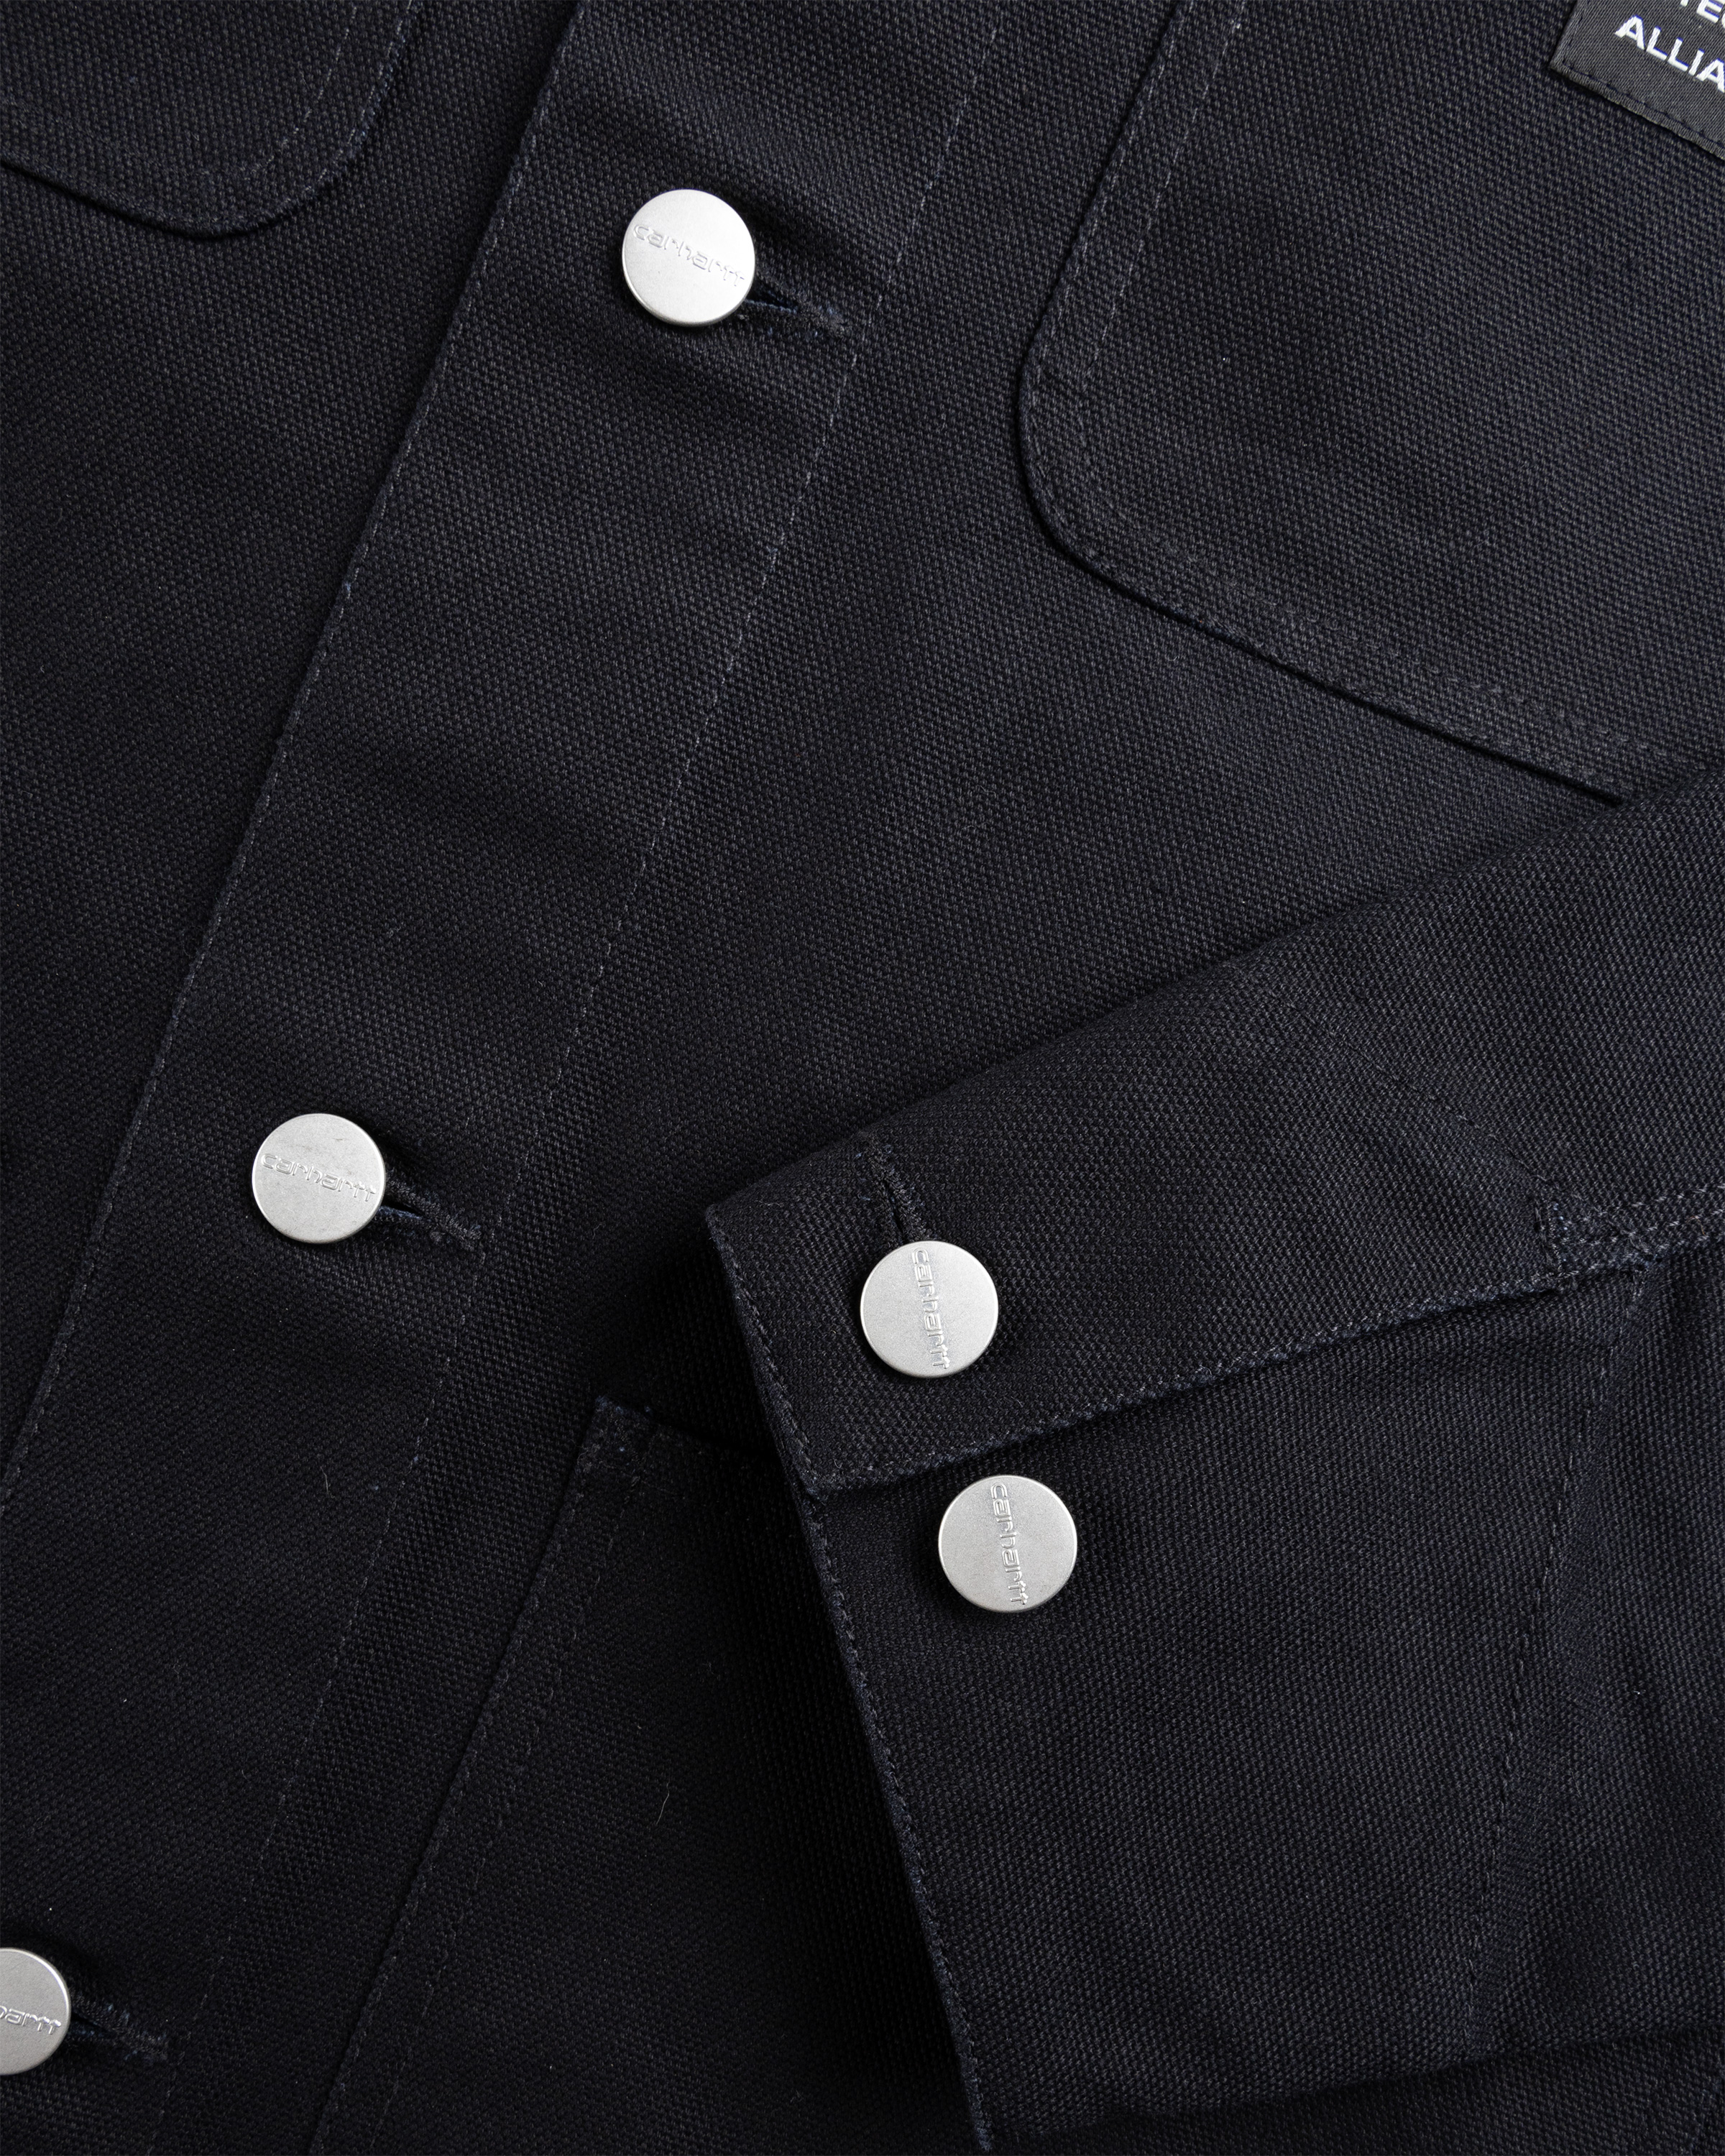 Carhartt WIP x Tresor – Way Of The Light Michigan Coat Black/Dark Grey Reflective - Outerwear - Black - Image 7